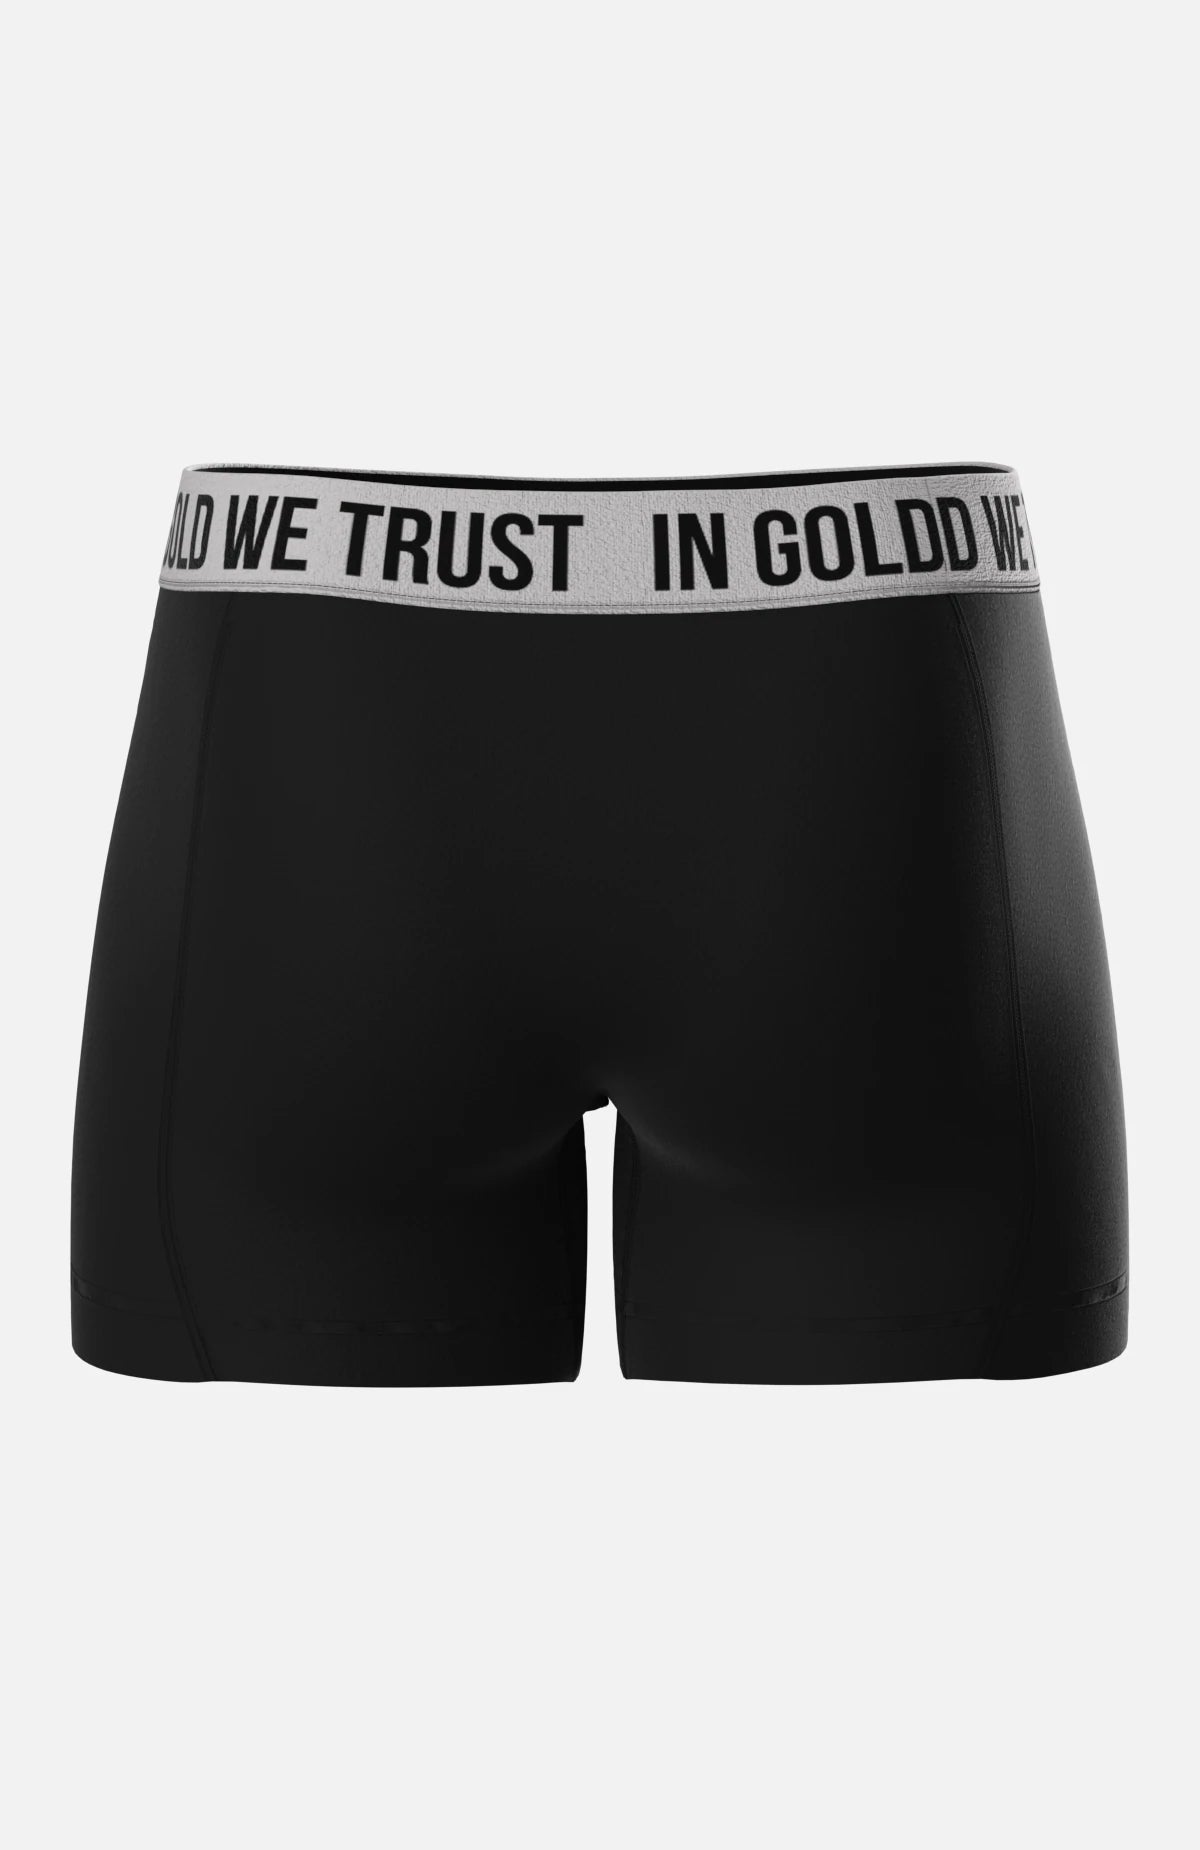 In Gold We Trust Boxer 3-Pack Jet Black